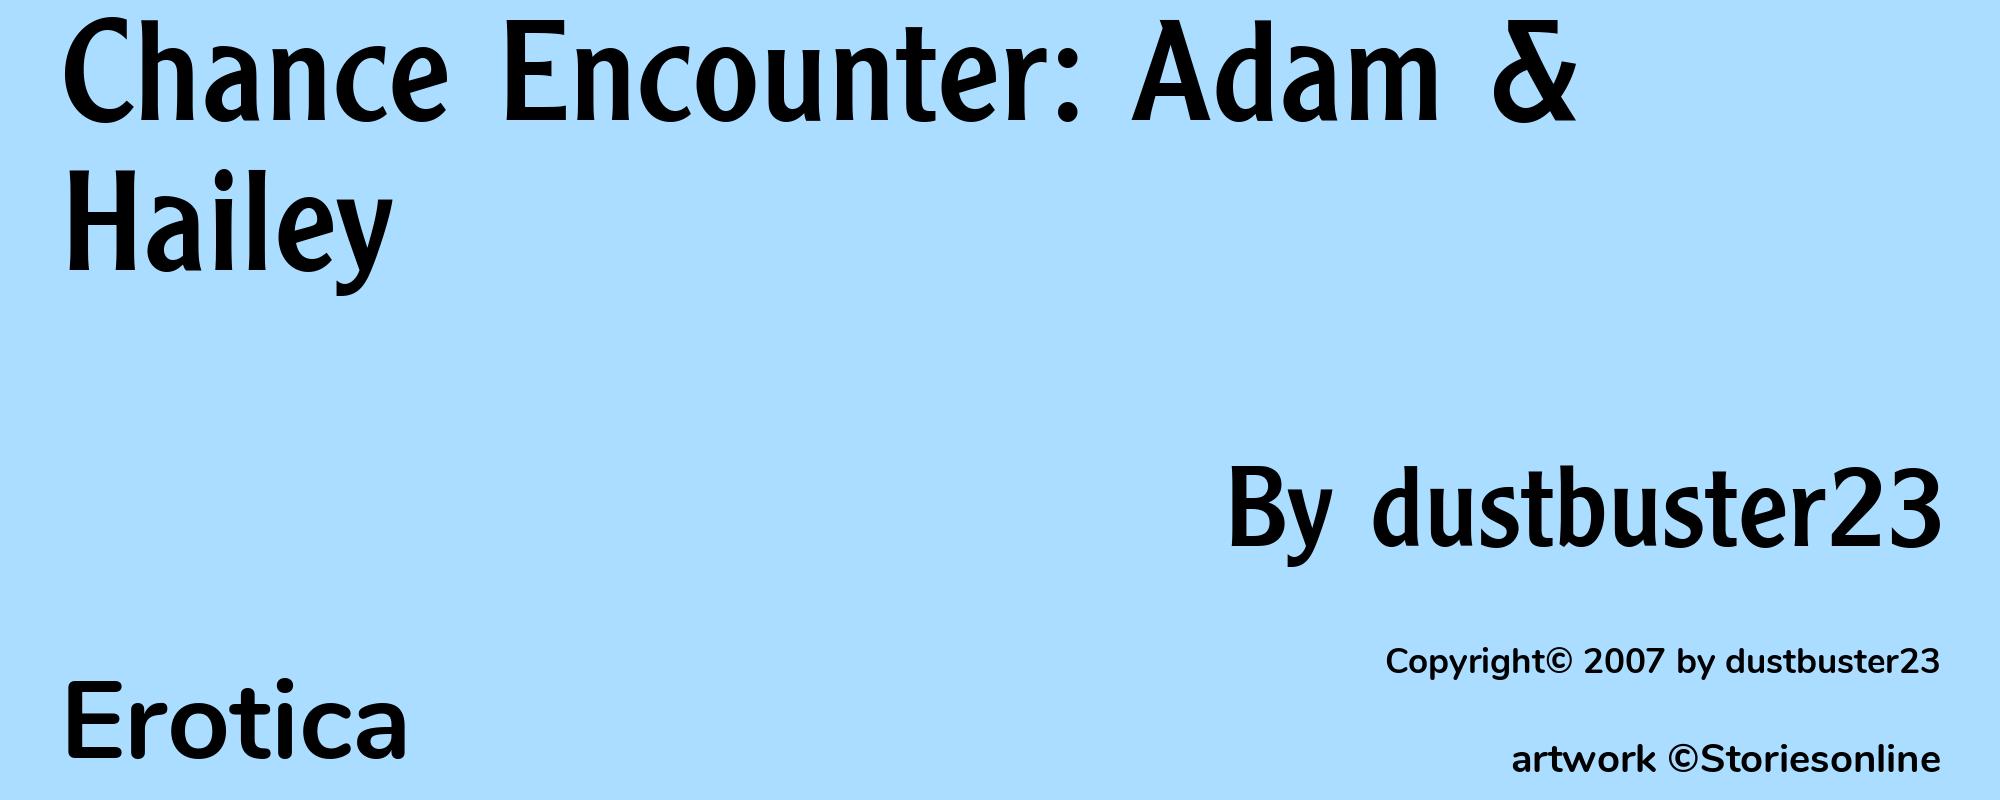 Chance Encounter: Adam & Hailey - Cover